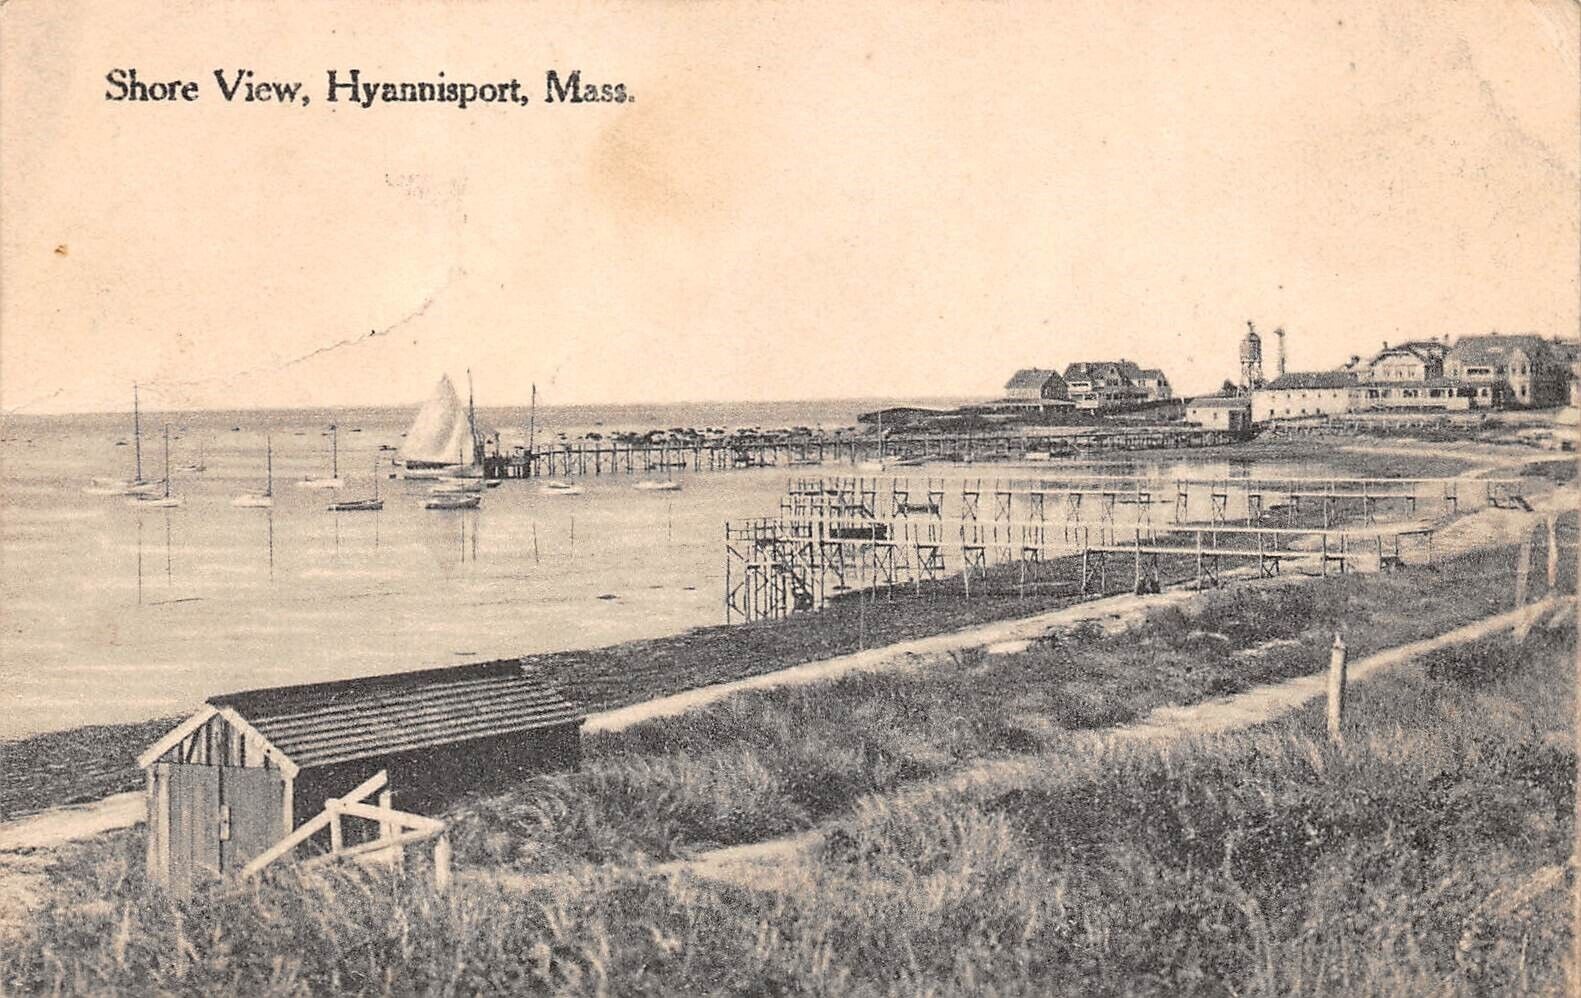 Hyannisport Massachusetts SHORE VIEW 1911 H. A. Dickerman Postcard